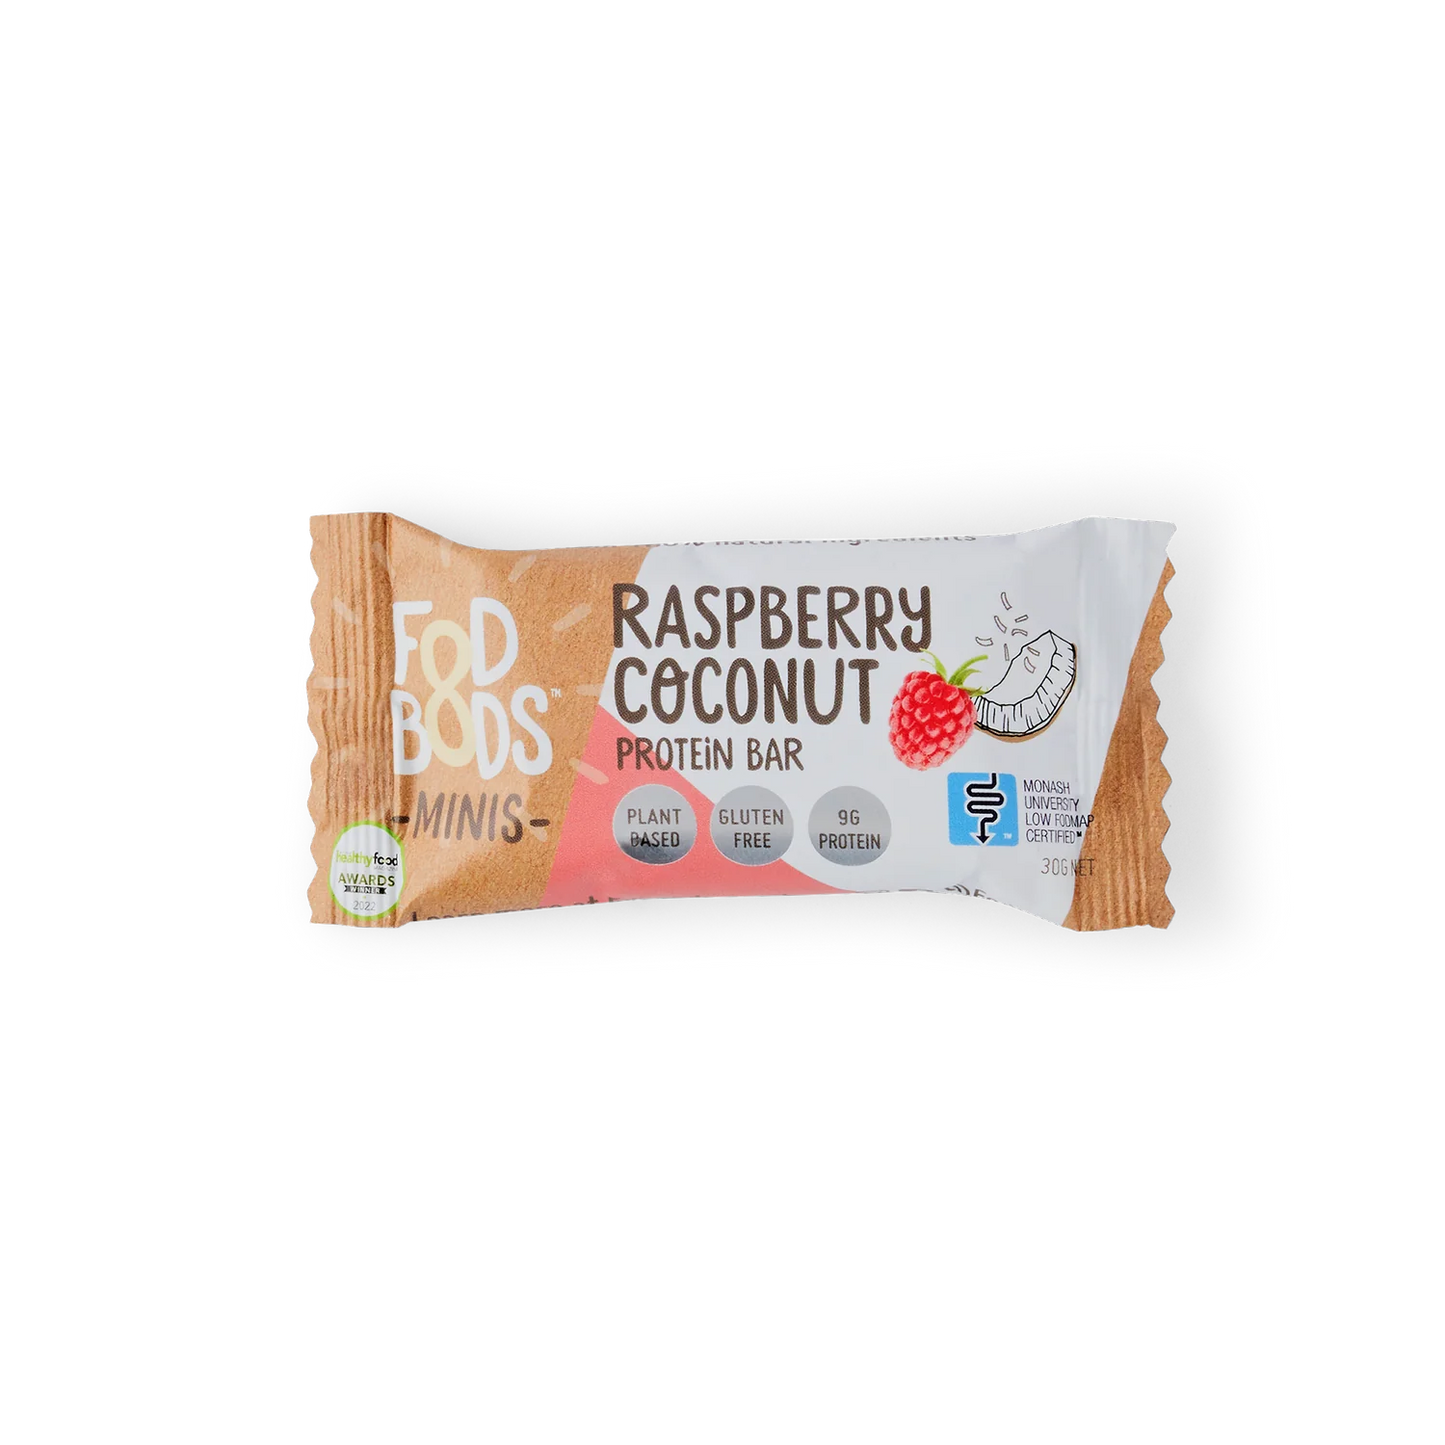 Fodbods - Raspberry Coconut Protein Bar